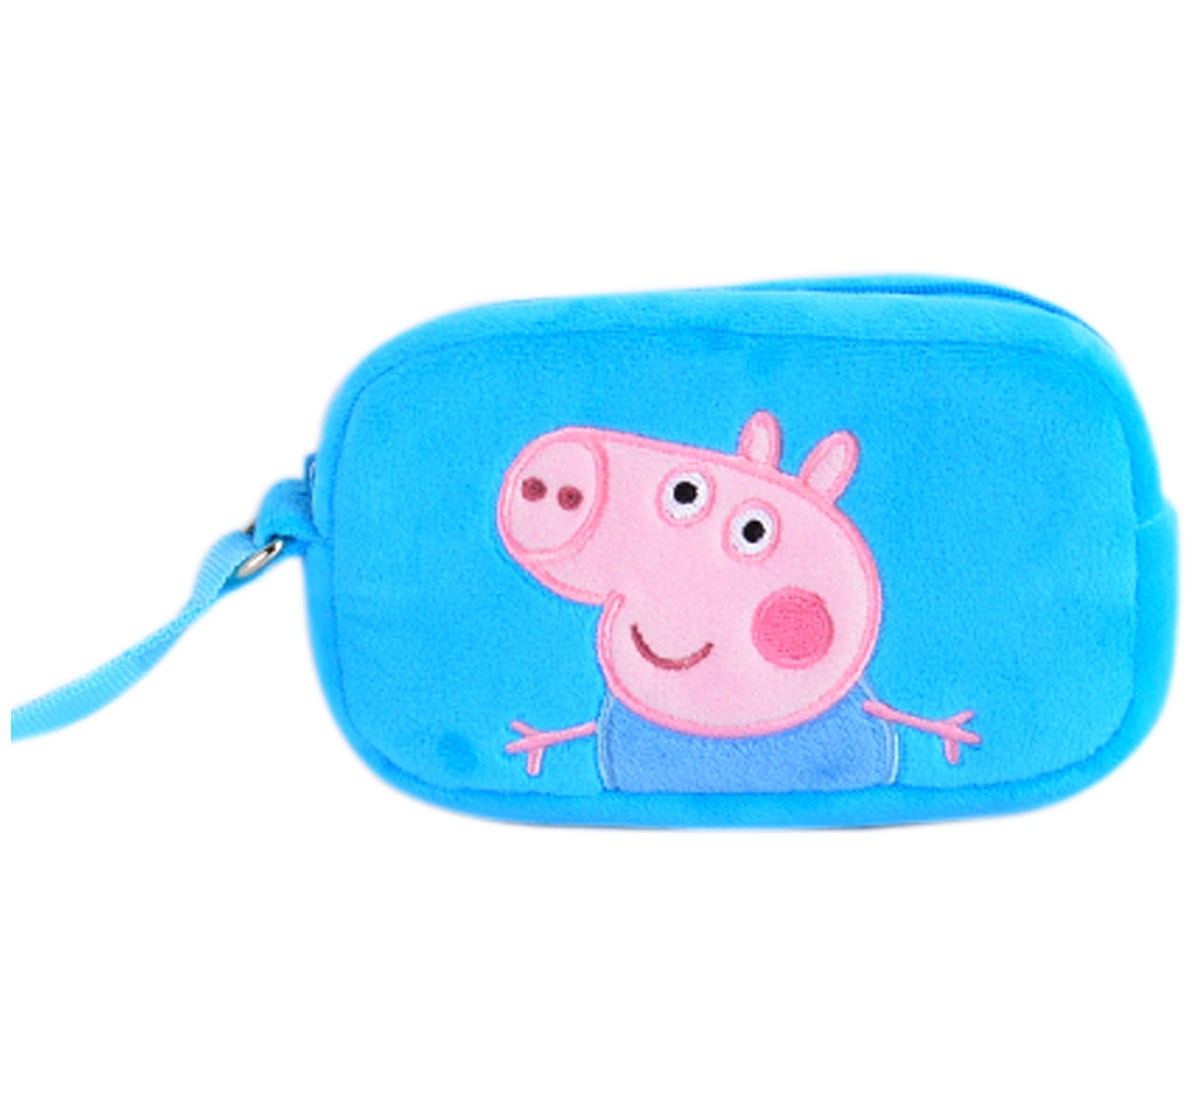 George Pig Blue Plush Toy Wallet, 0M+ (Multicolor)